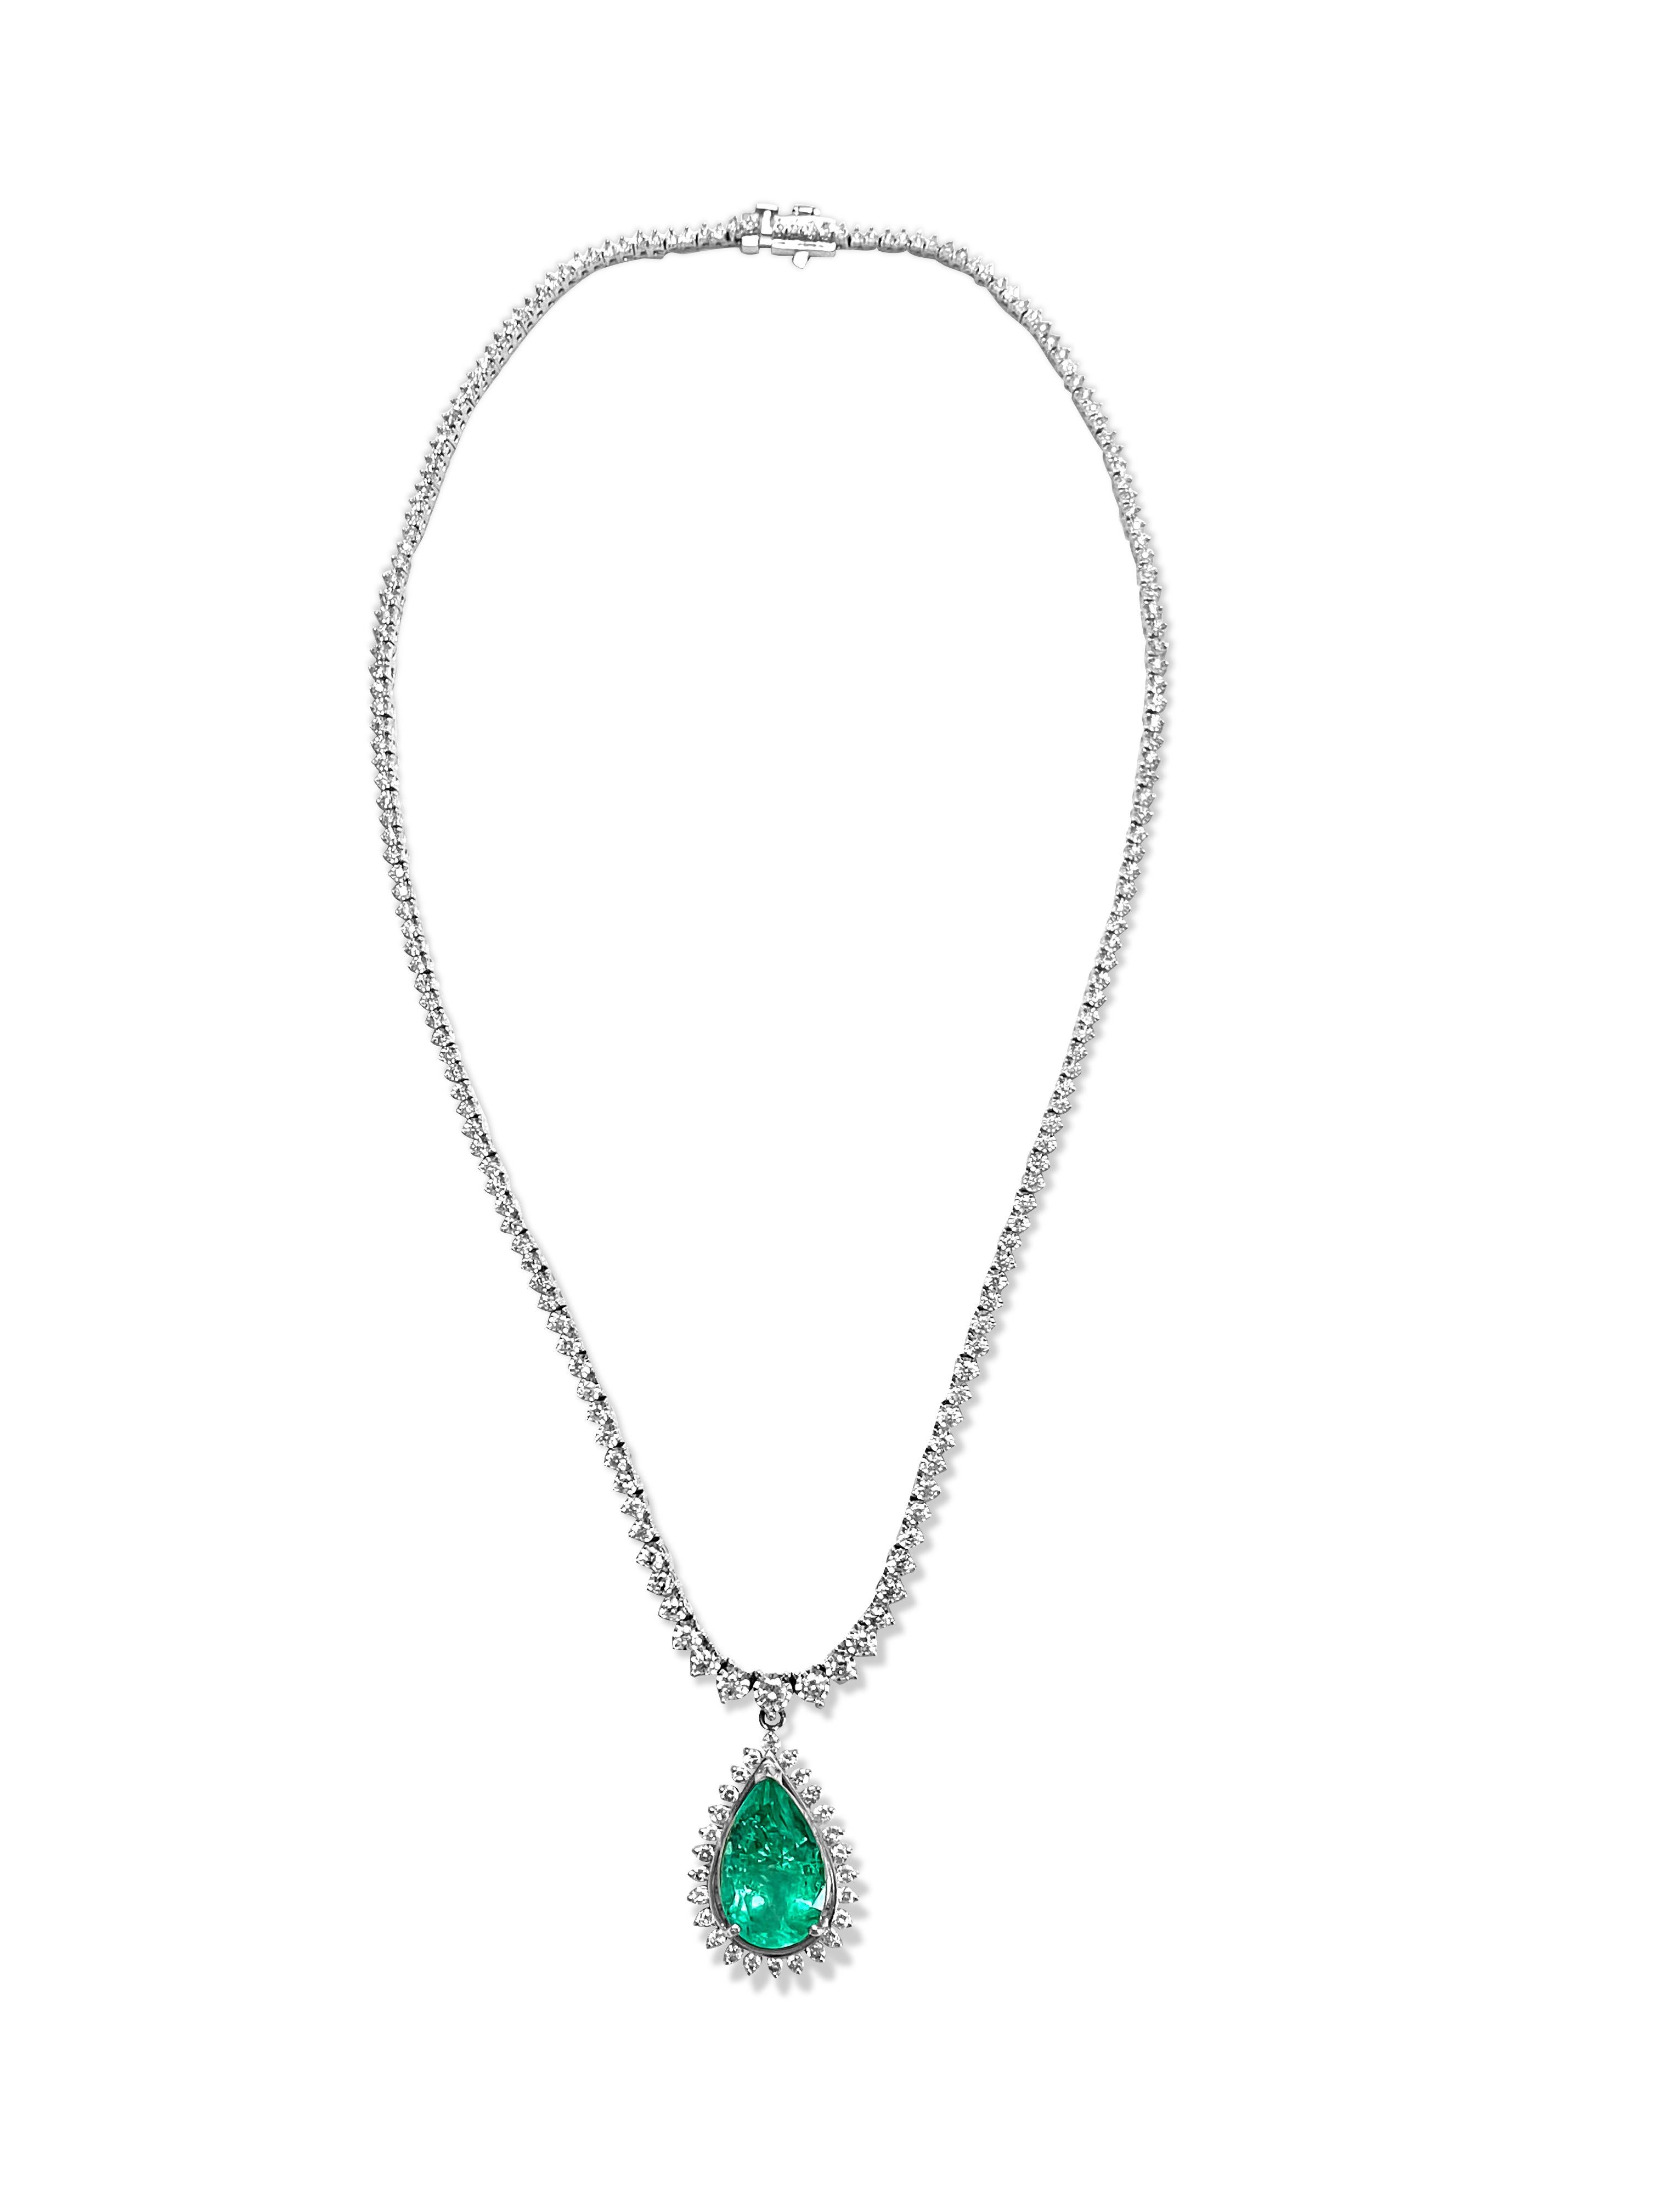 Certified 12.00 Carat Colombian Emerald Diamond Necklace 14 Karat White ...